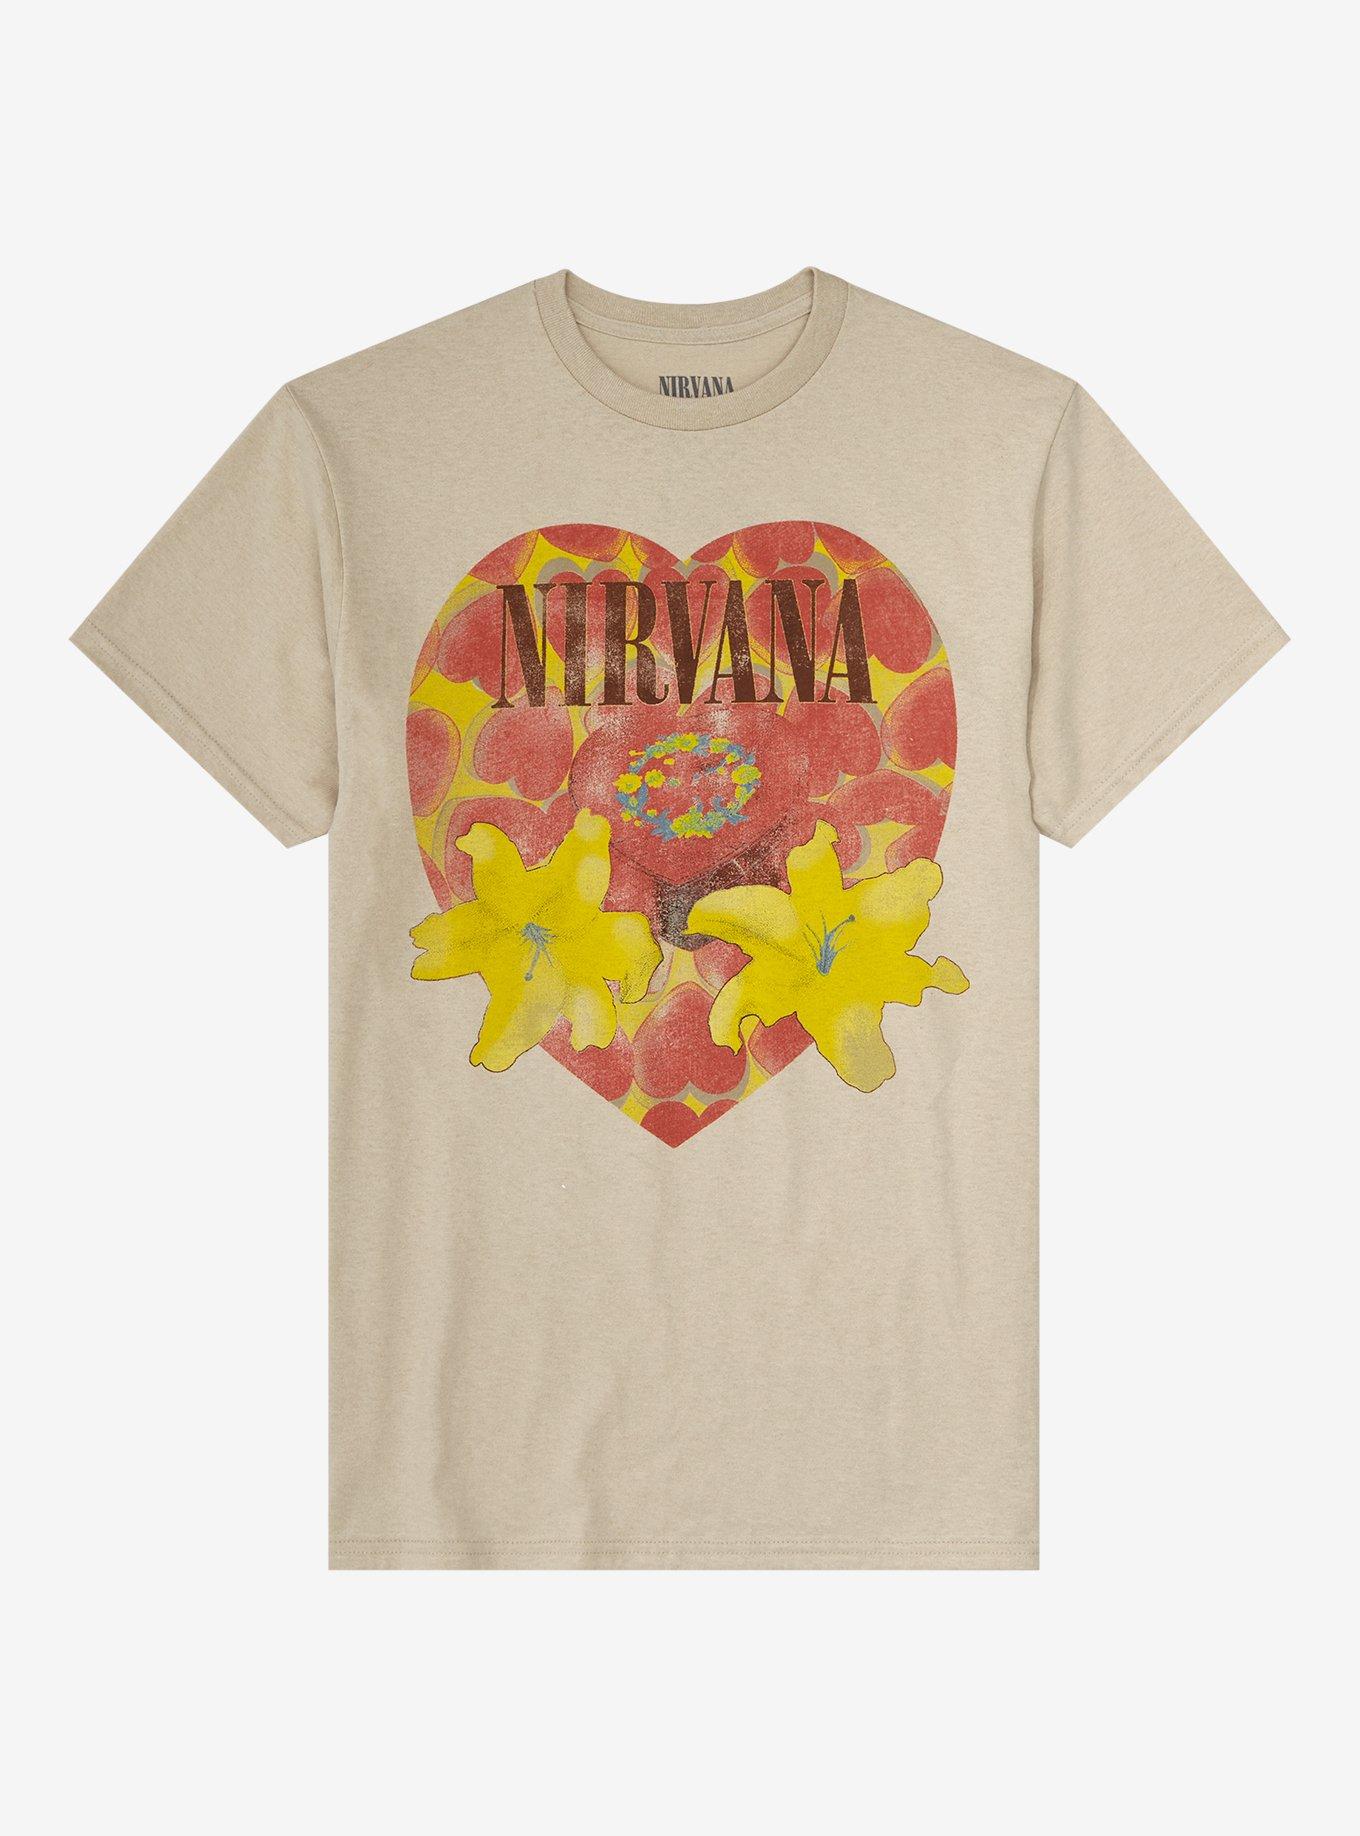 Nirvana Heart-Shaped Box Heart Boyfriend Fit Girls T-Shirt, OATMEAL, hi-res